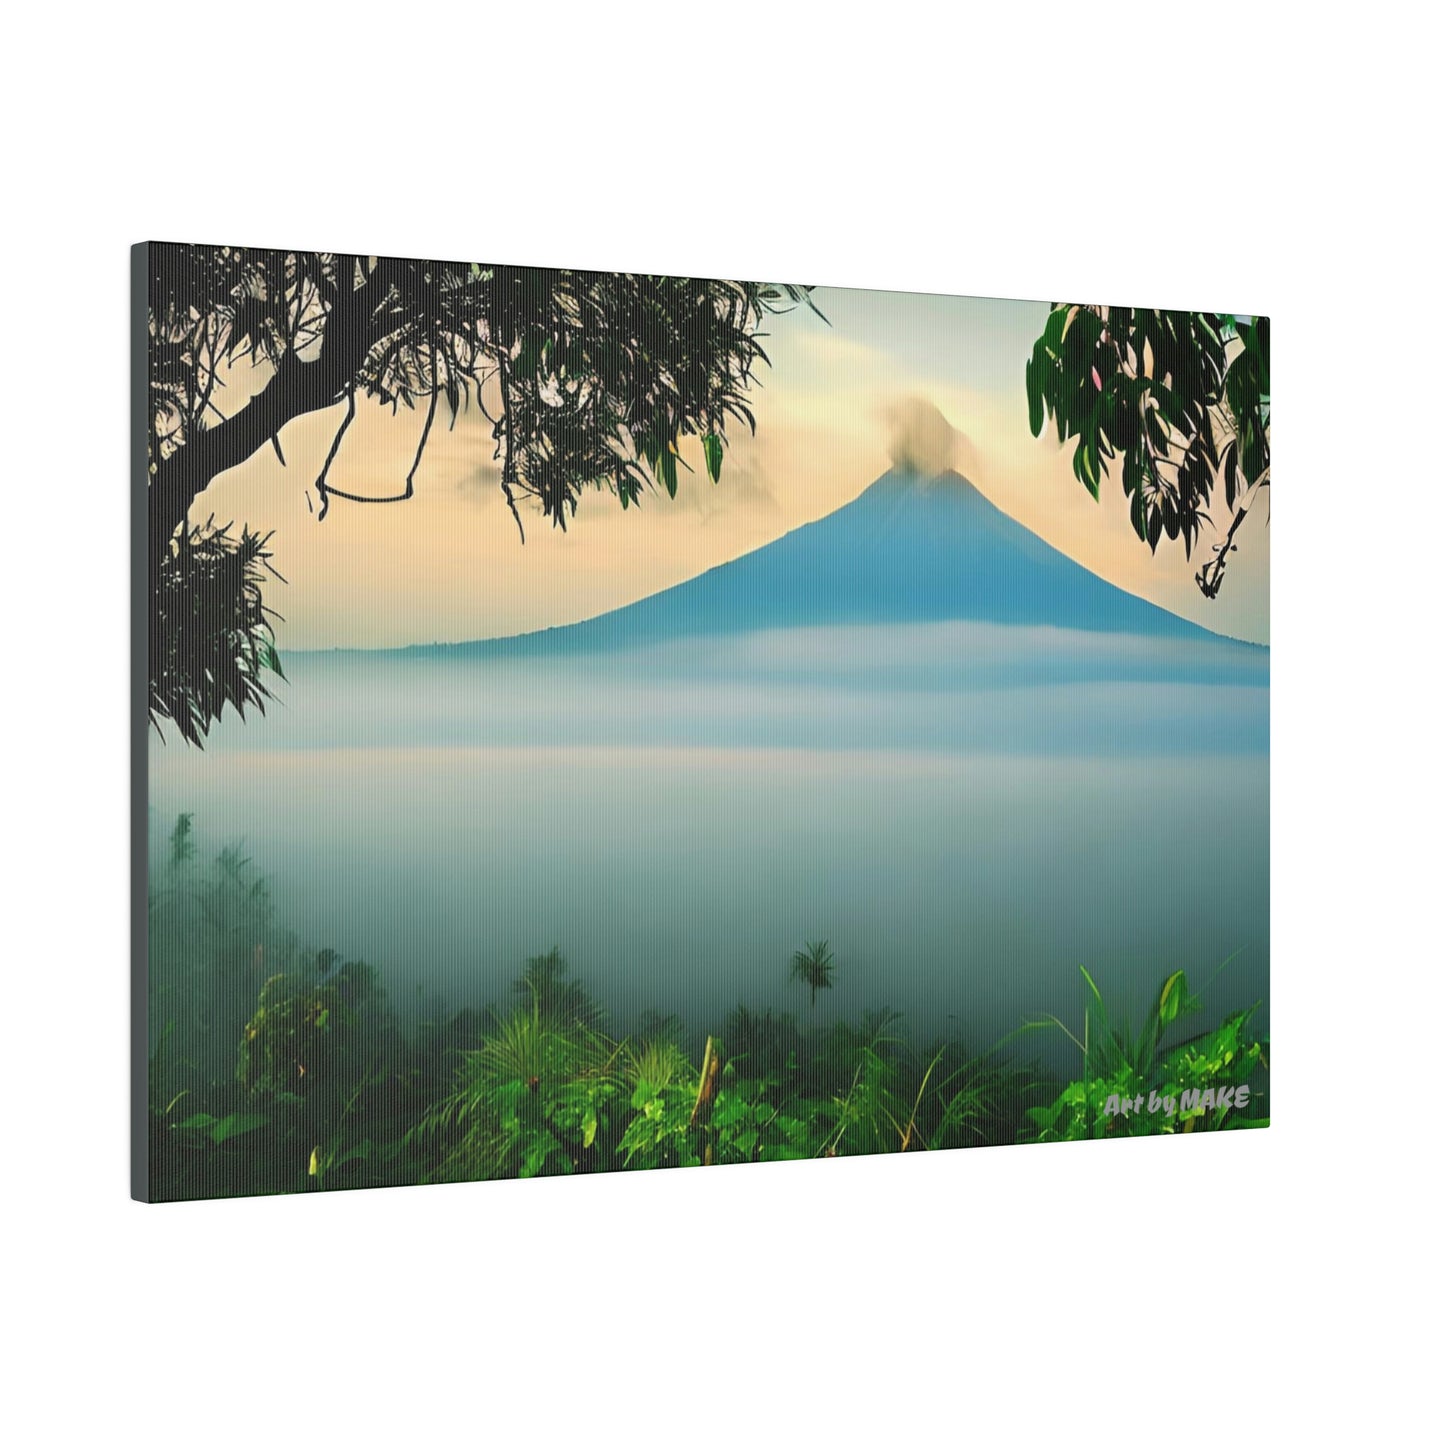 Bali Mountains 2 - 24"x16" Matte Canvas, Stretched, 0.75"